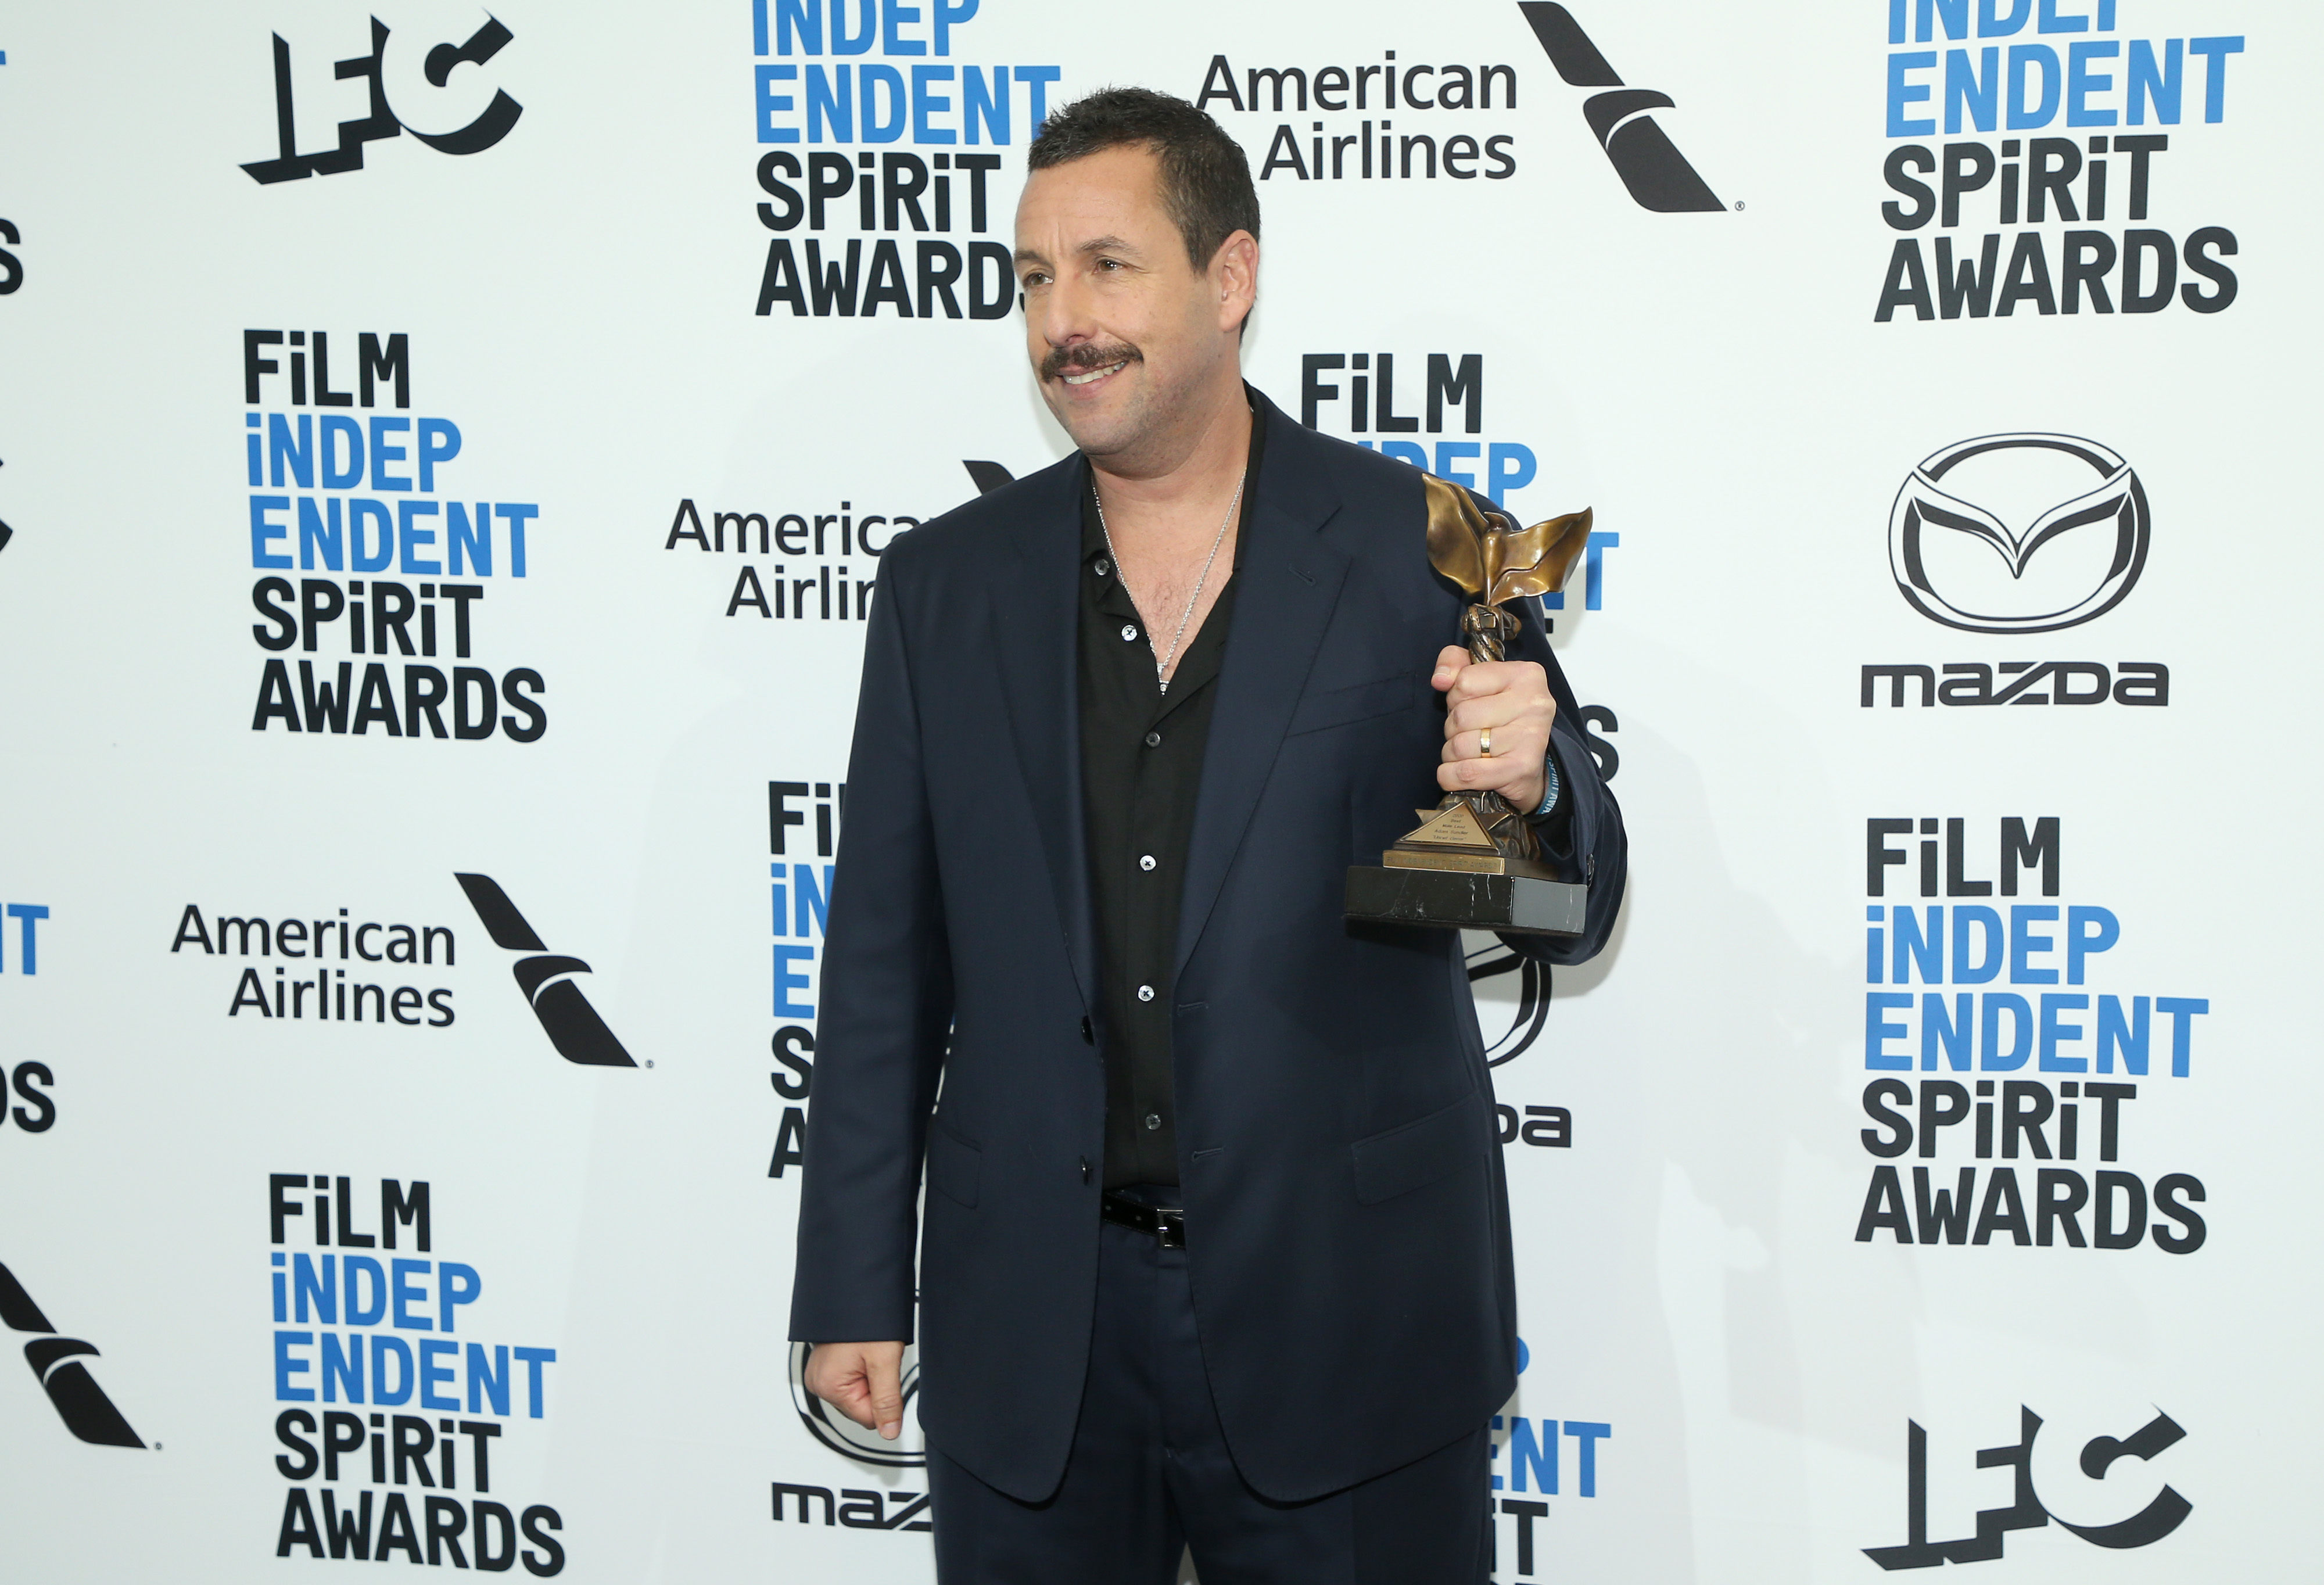 Adam Sandler Jokes About Oscars Snub In Spirit Awards Acceptance Speech